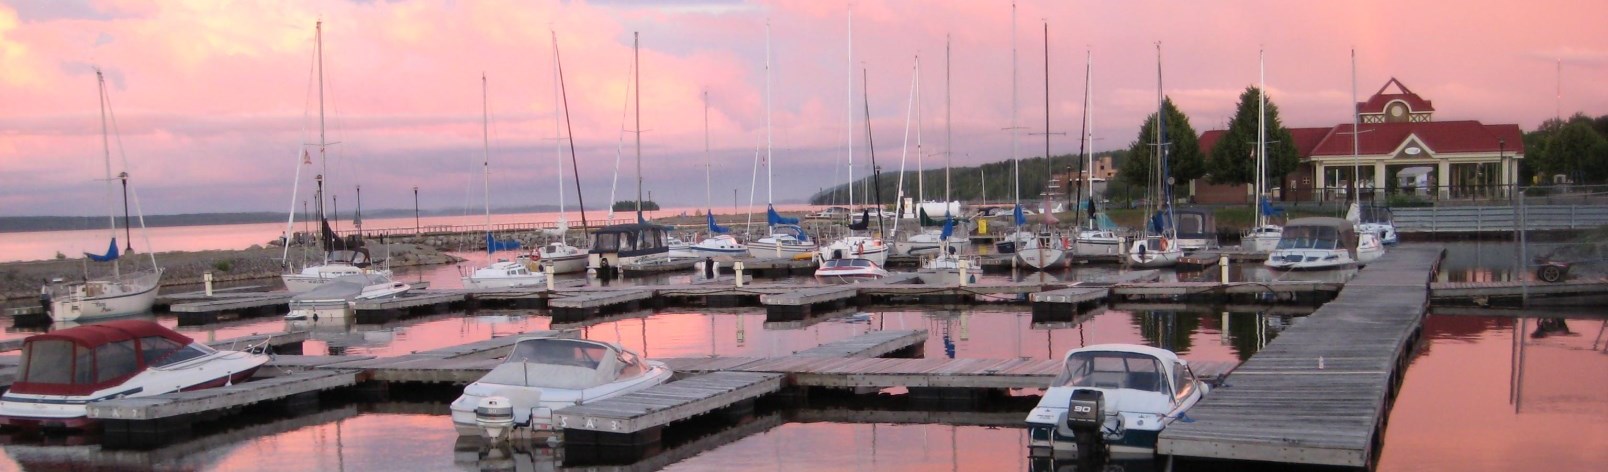 boats in marina at sunset